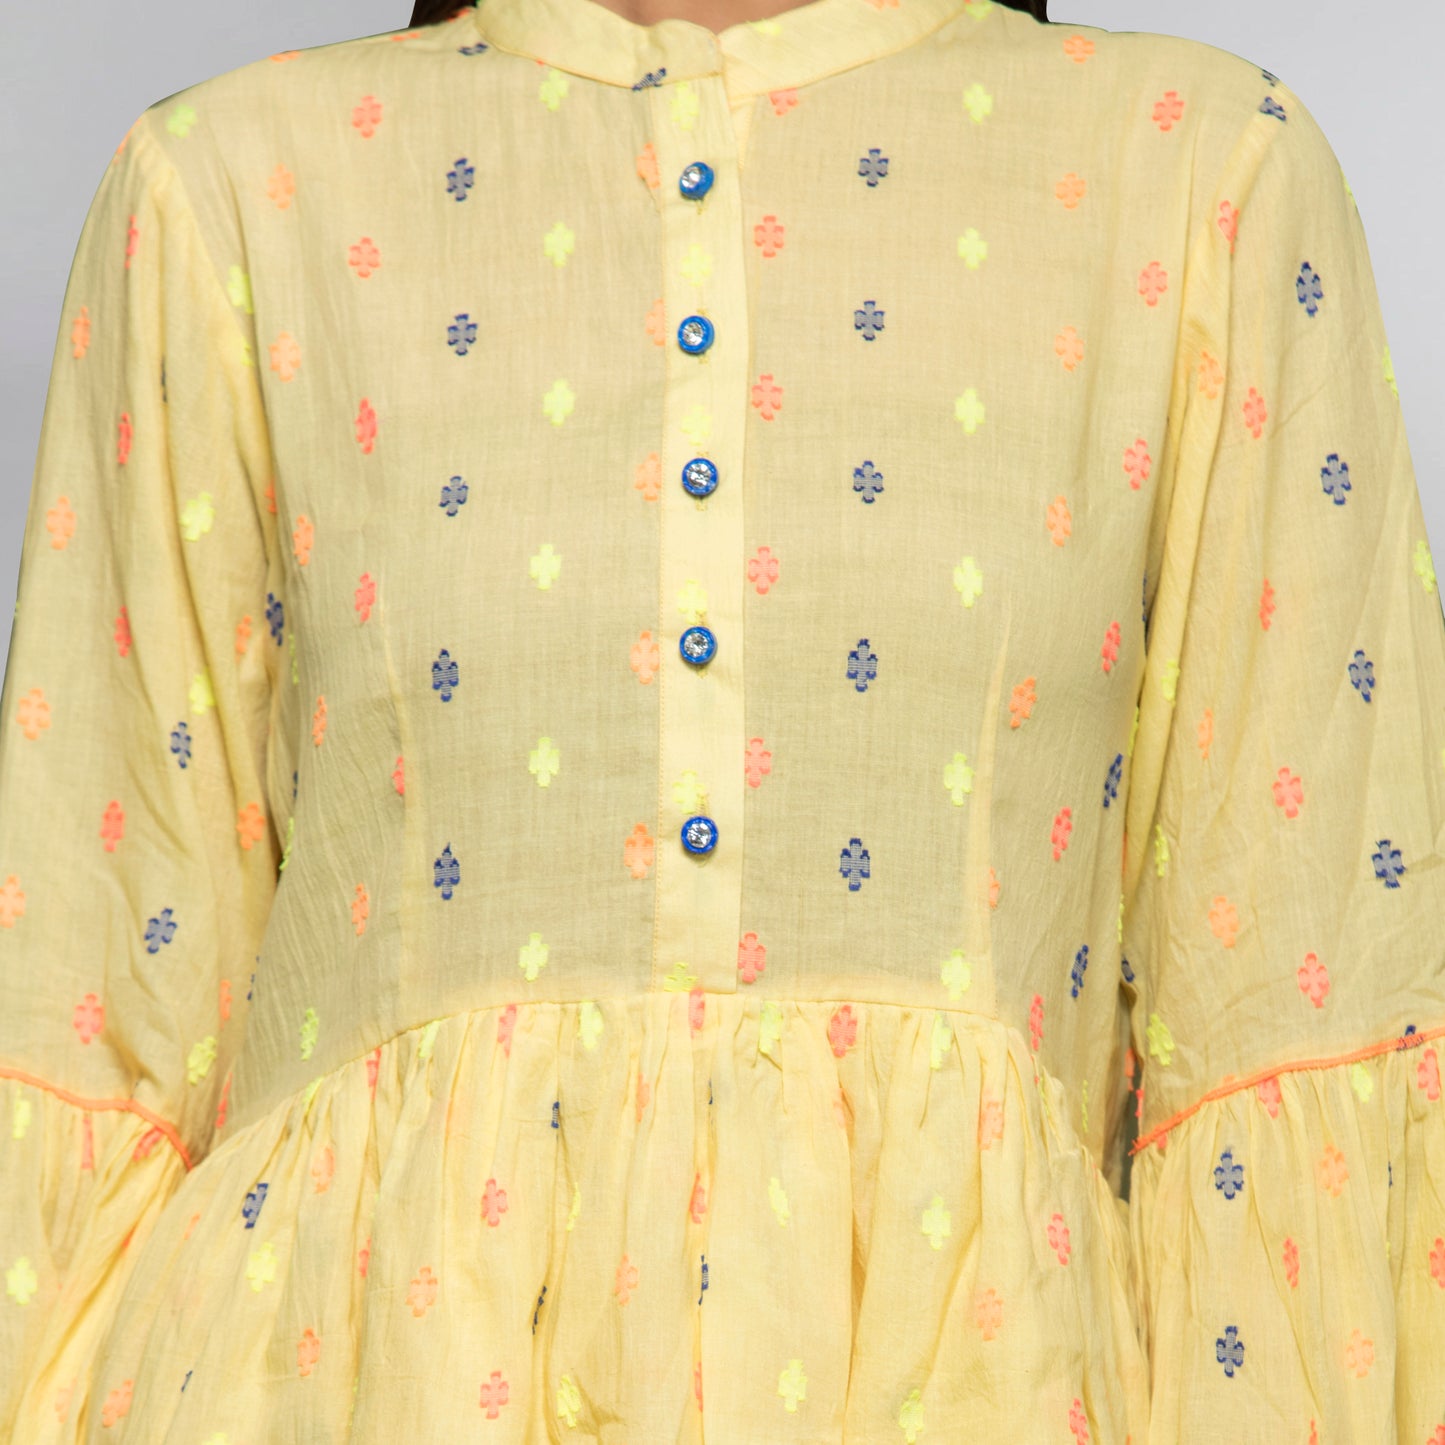 Lemon Yellow Frill Dress